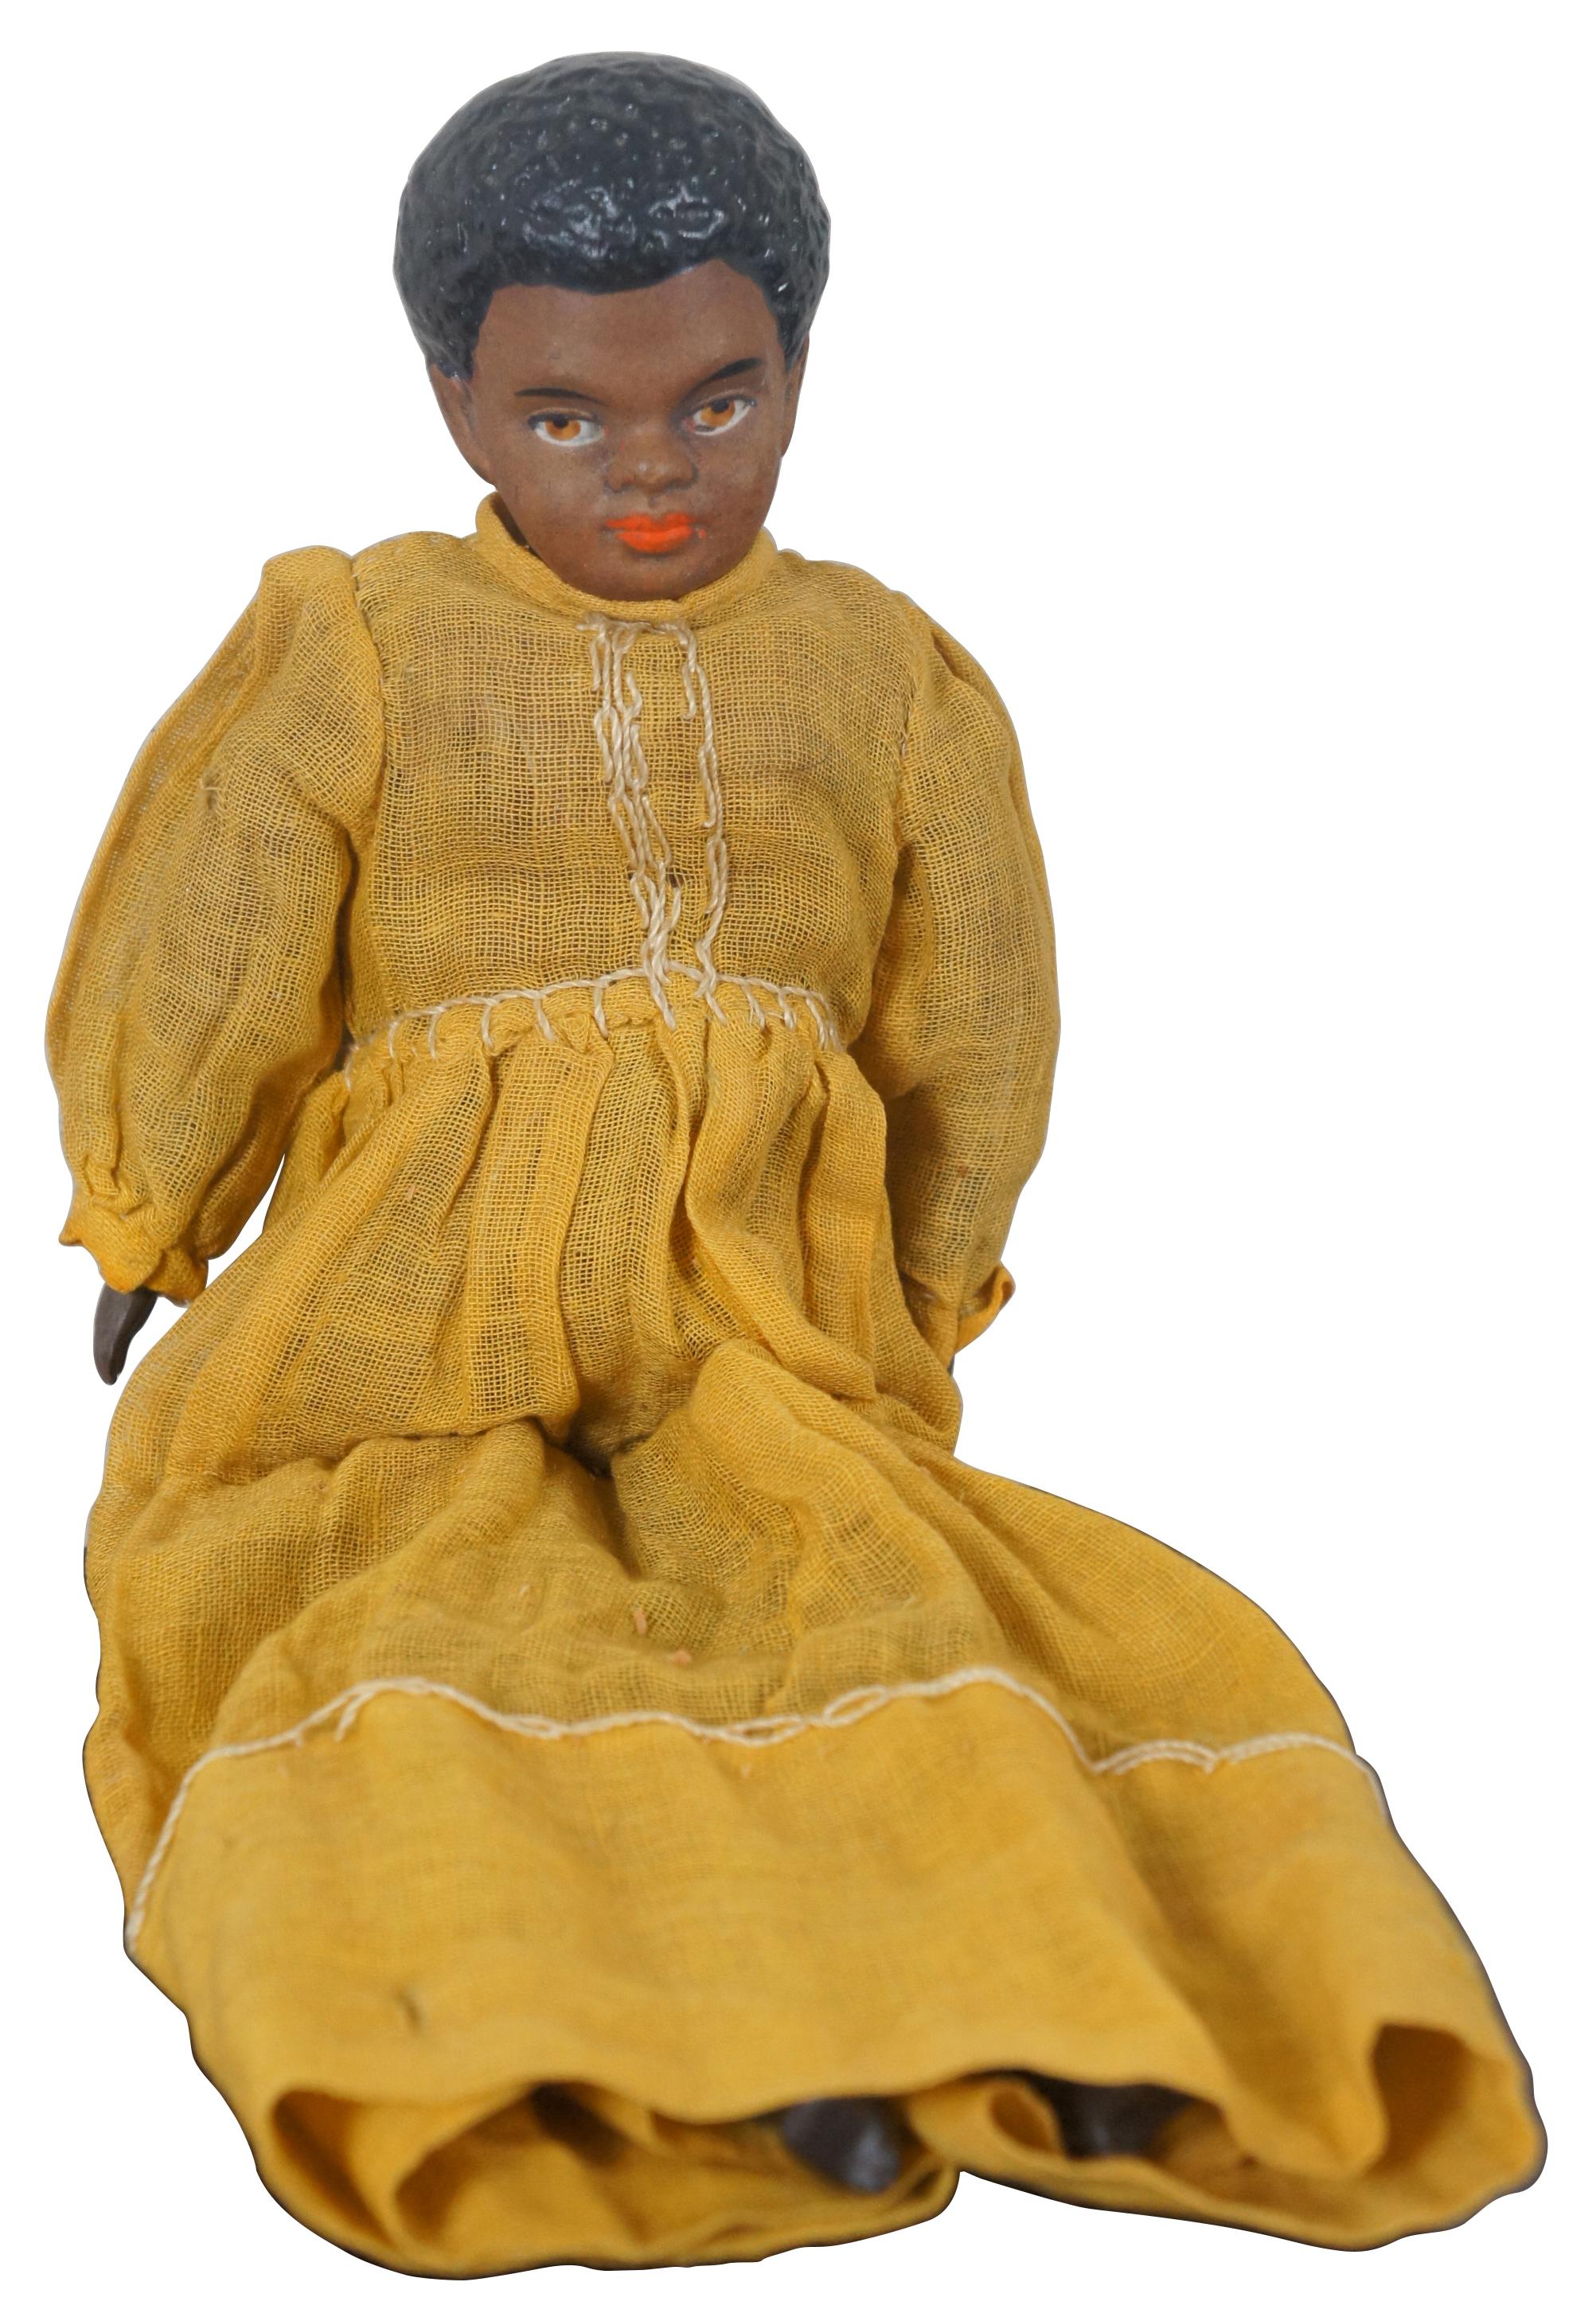 antique black dolls 1800s-1920s